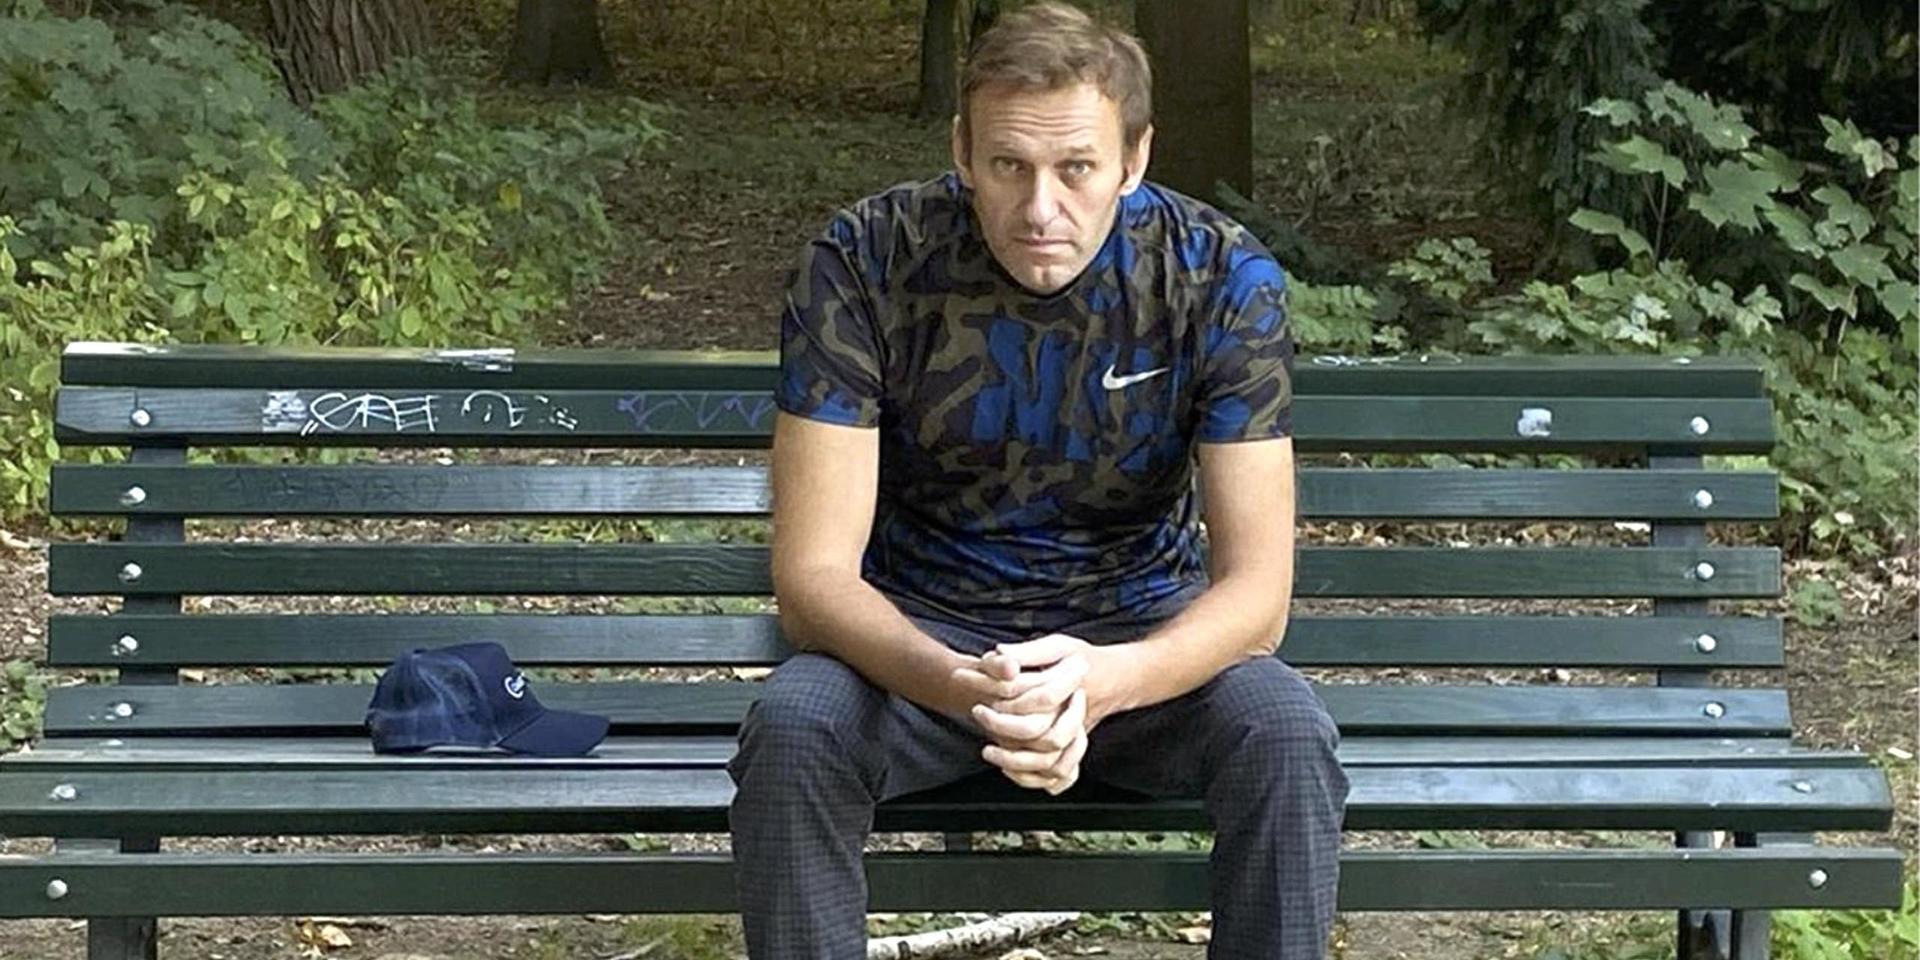  'Dagen har kommit – hurra!', skriver den ryske oppositionsledaren Aleksej Navalnyj på en Instagrambild, utlagt på onsdagen.